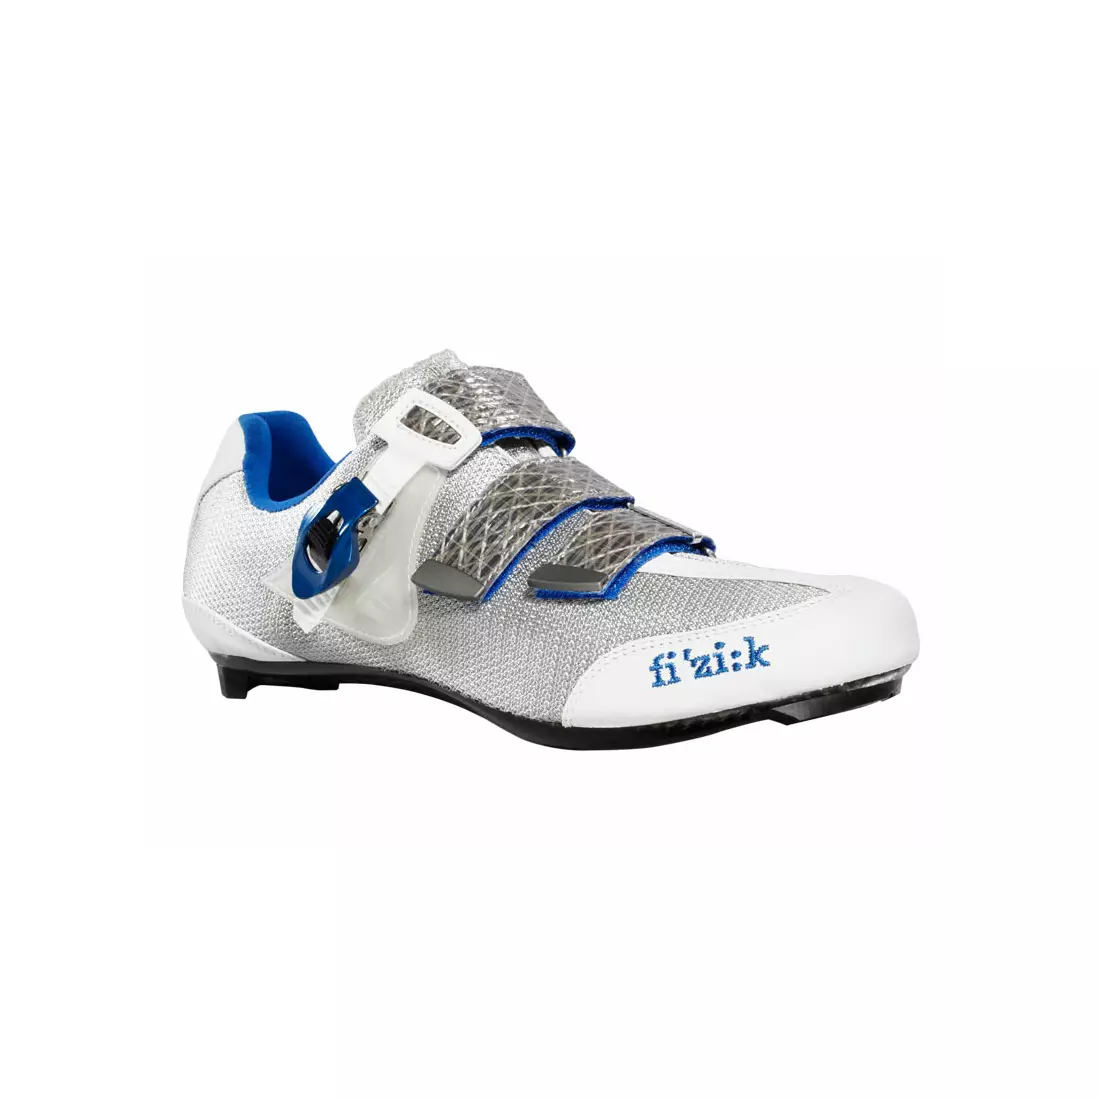 FIZIK R3 UOMO silniční cyklistická obuv bílá a modrá